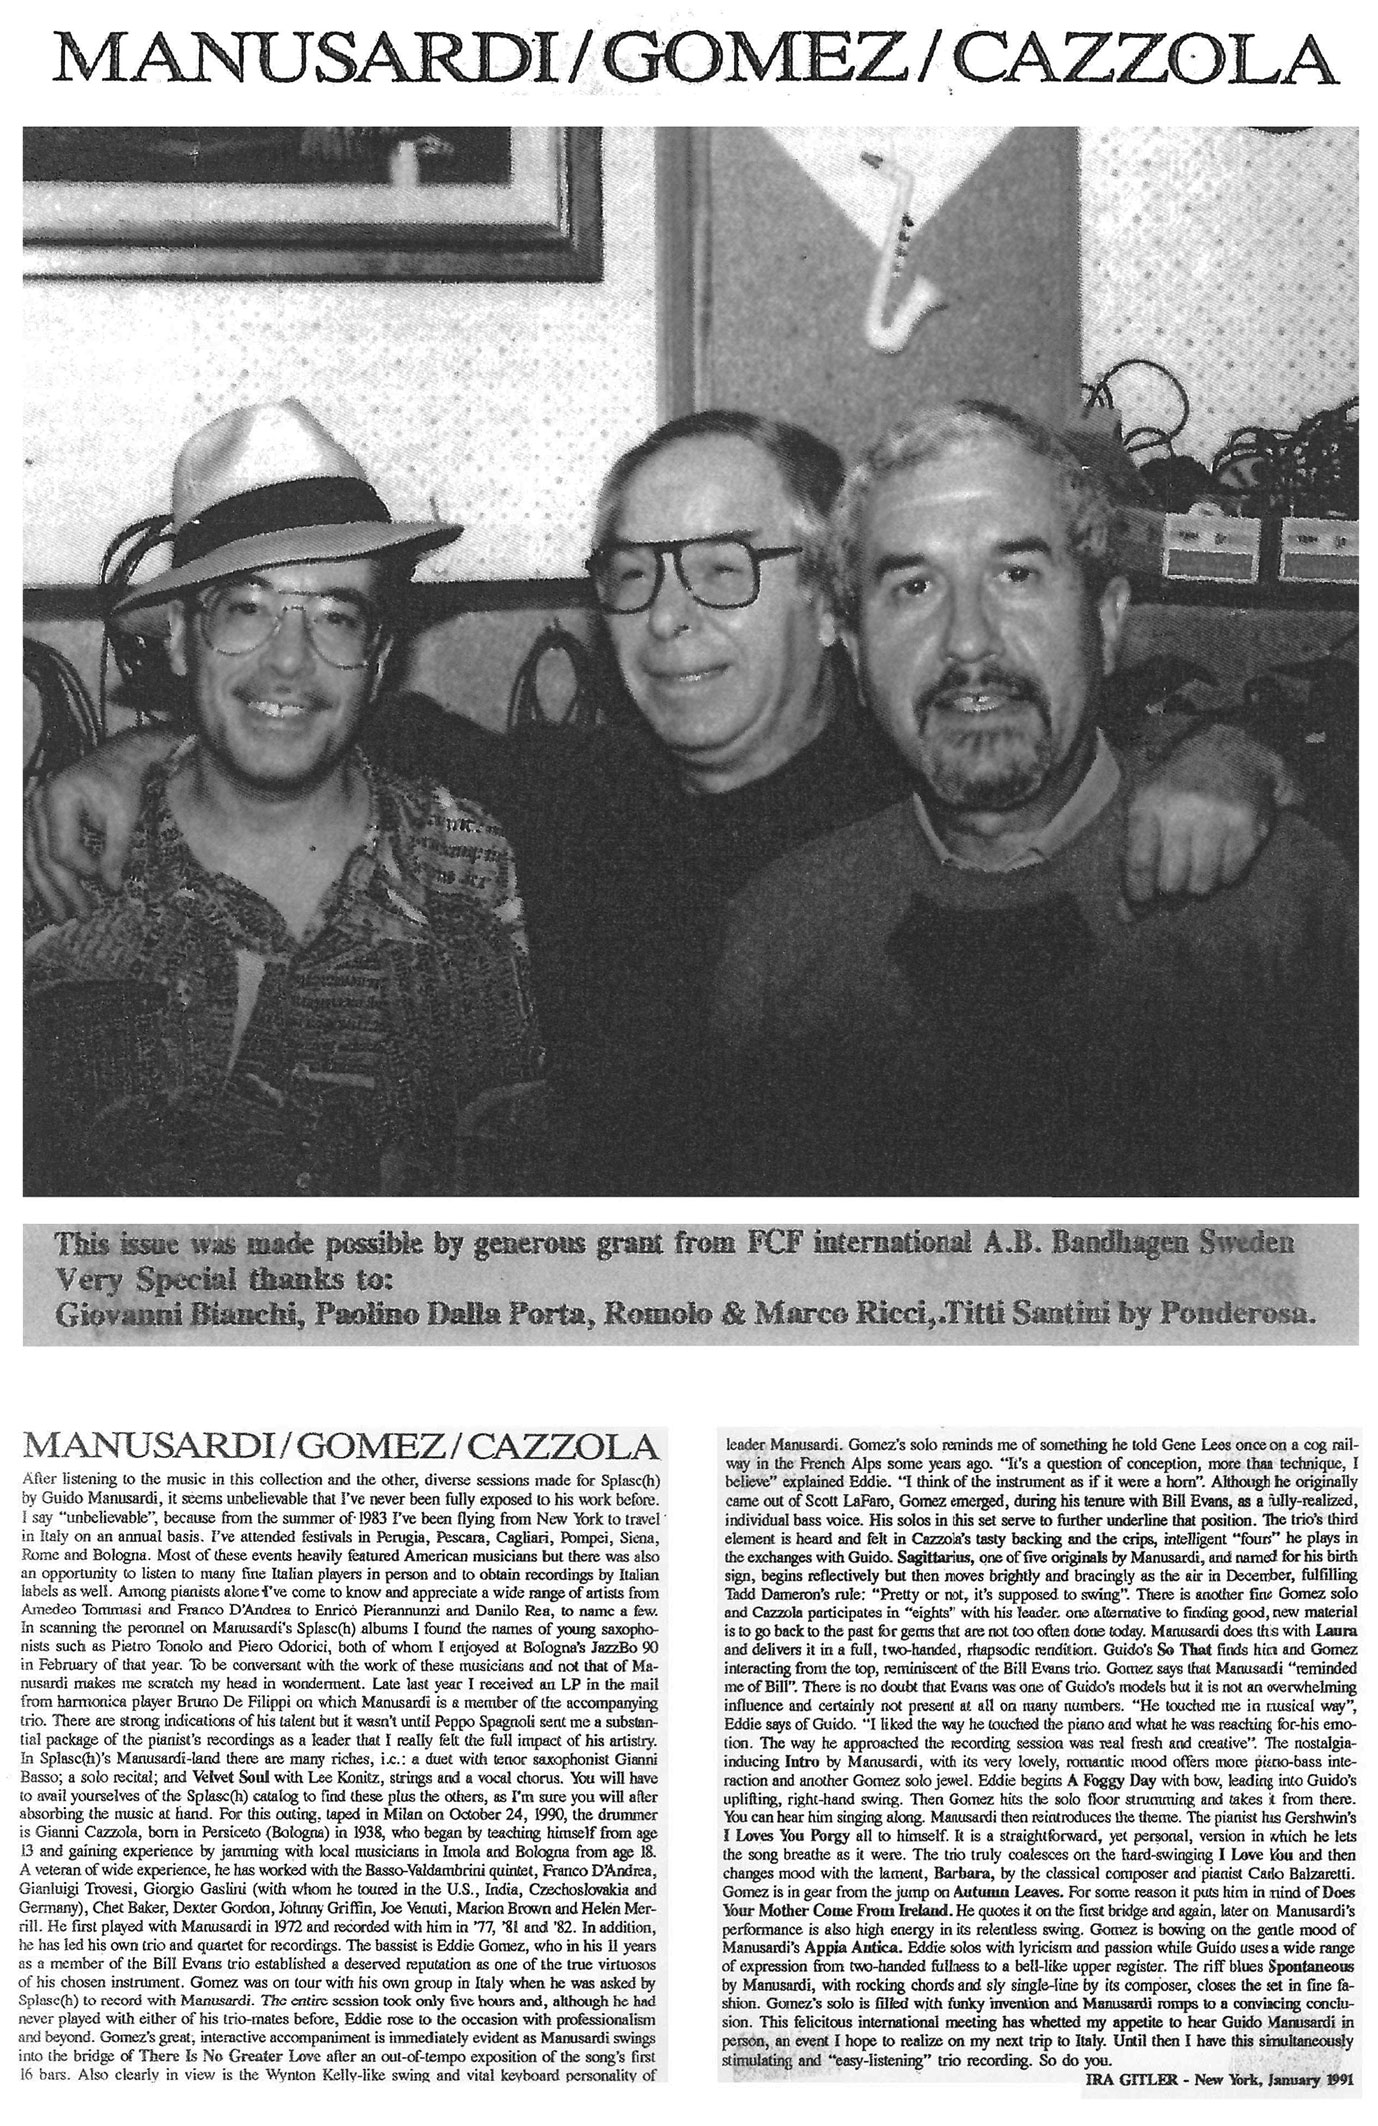 MANUSARDI / GOMEZ / CAZZOLLA NEW YORK 1991